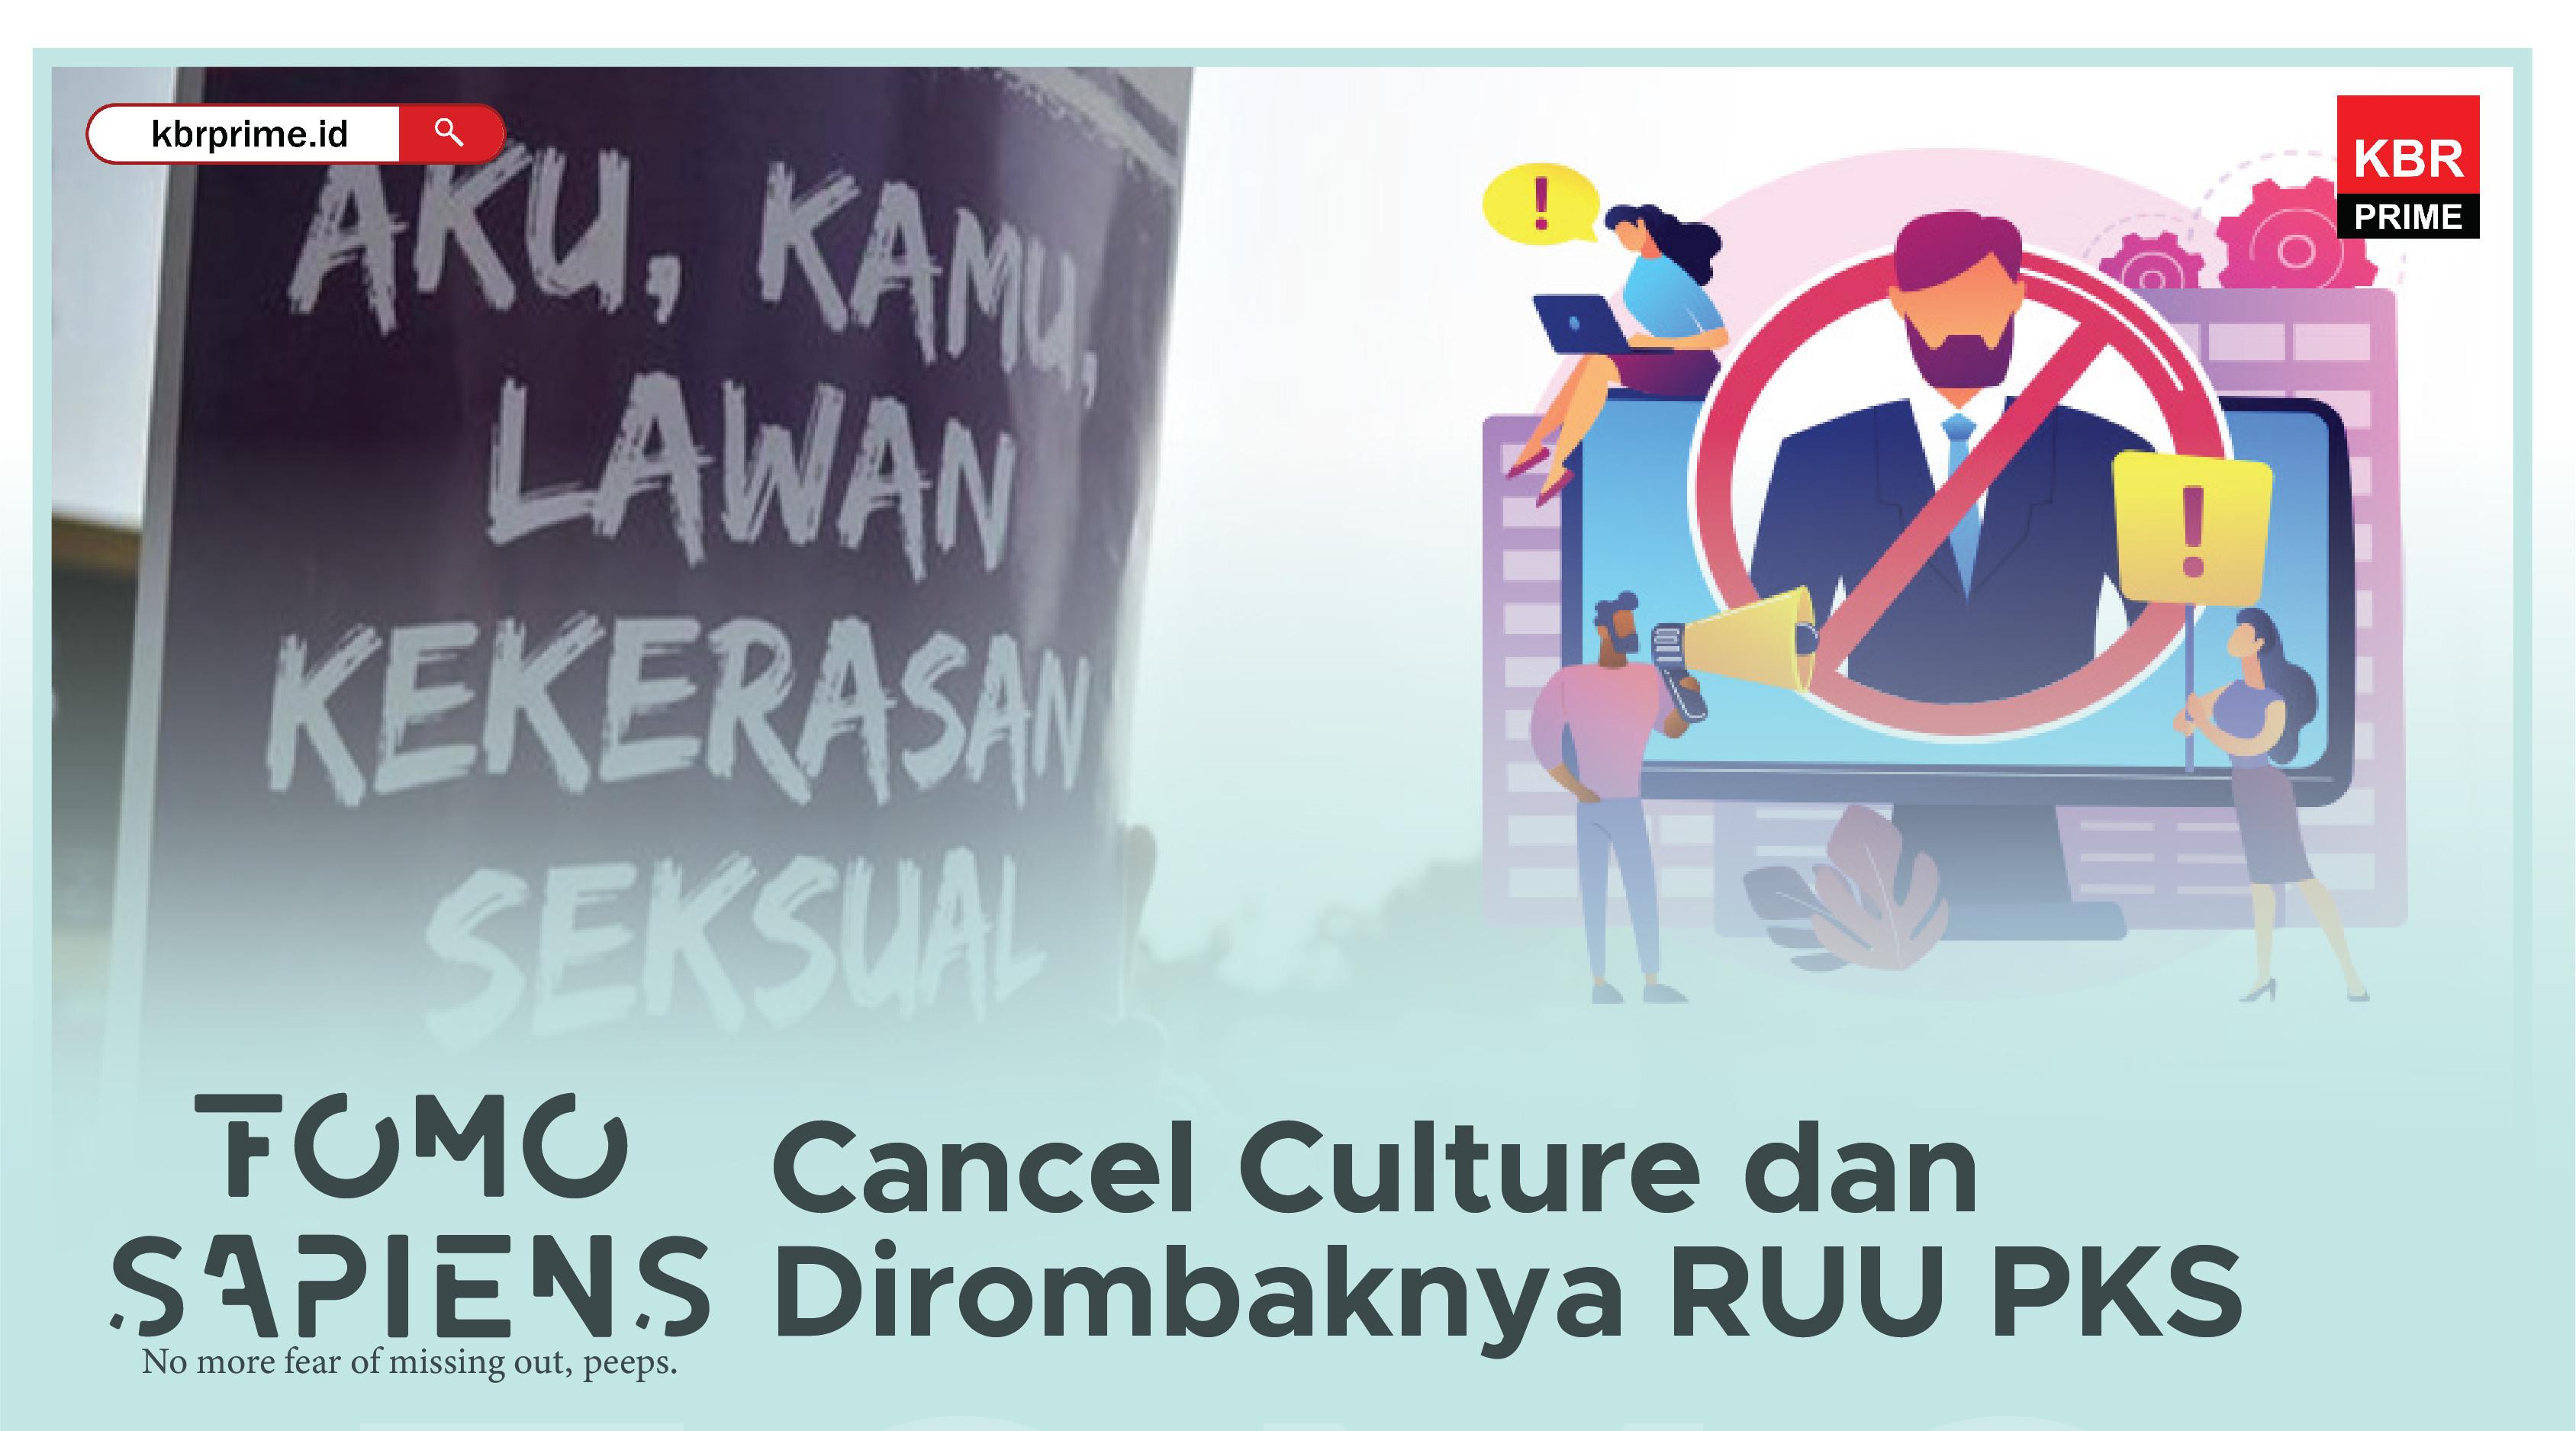 FOMO Sapiens : 'Cancel Culture' dan Dirombaknya RUU PKS